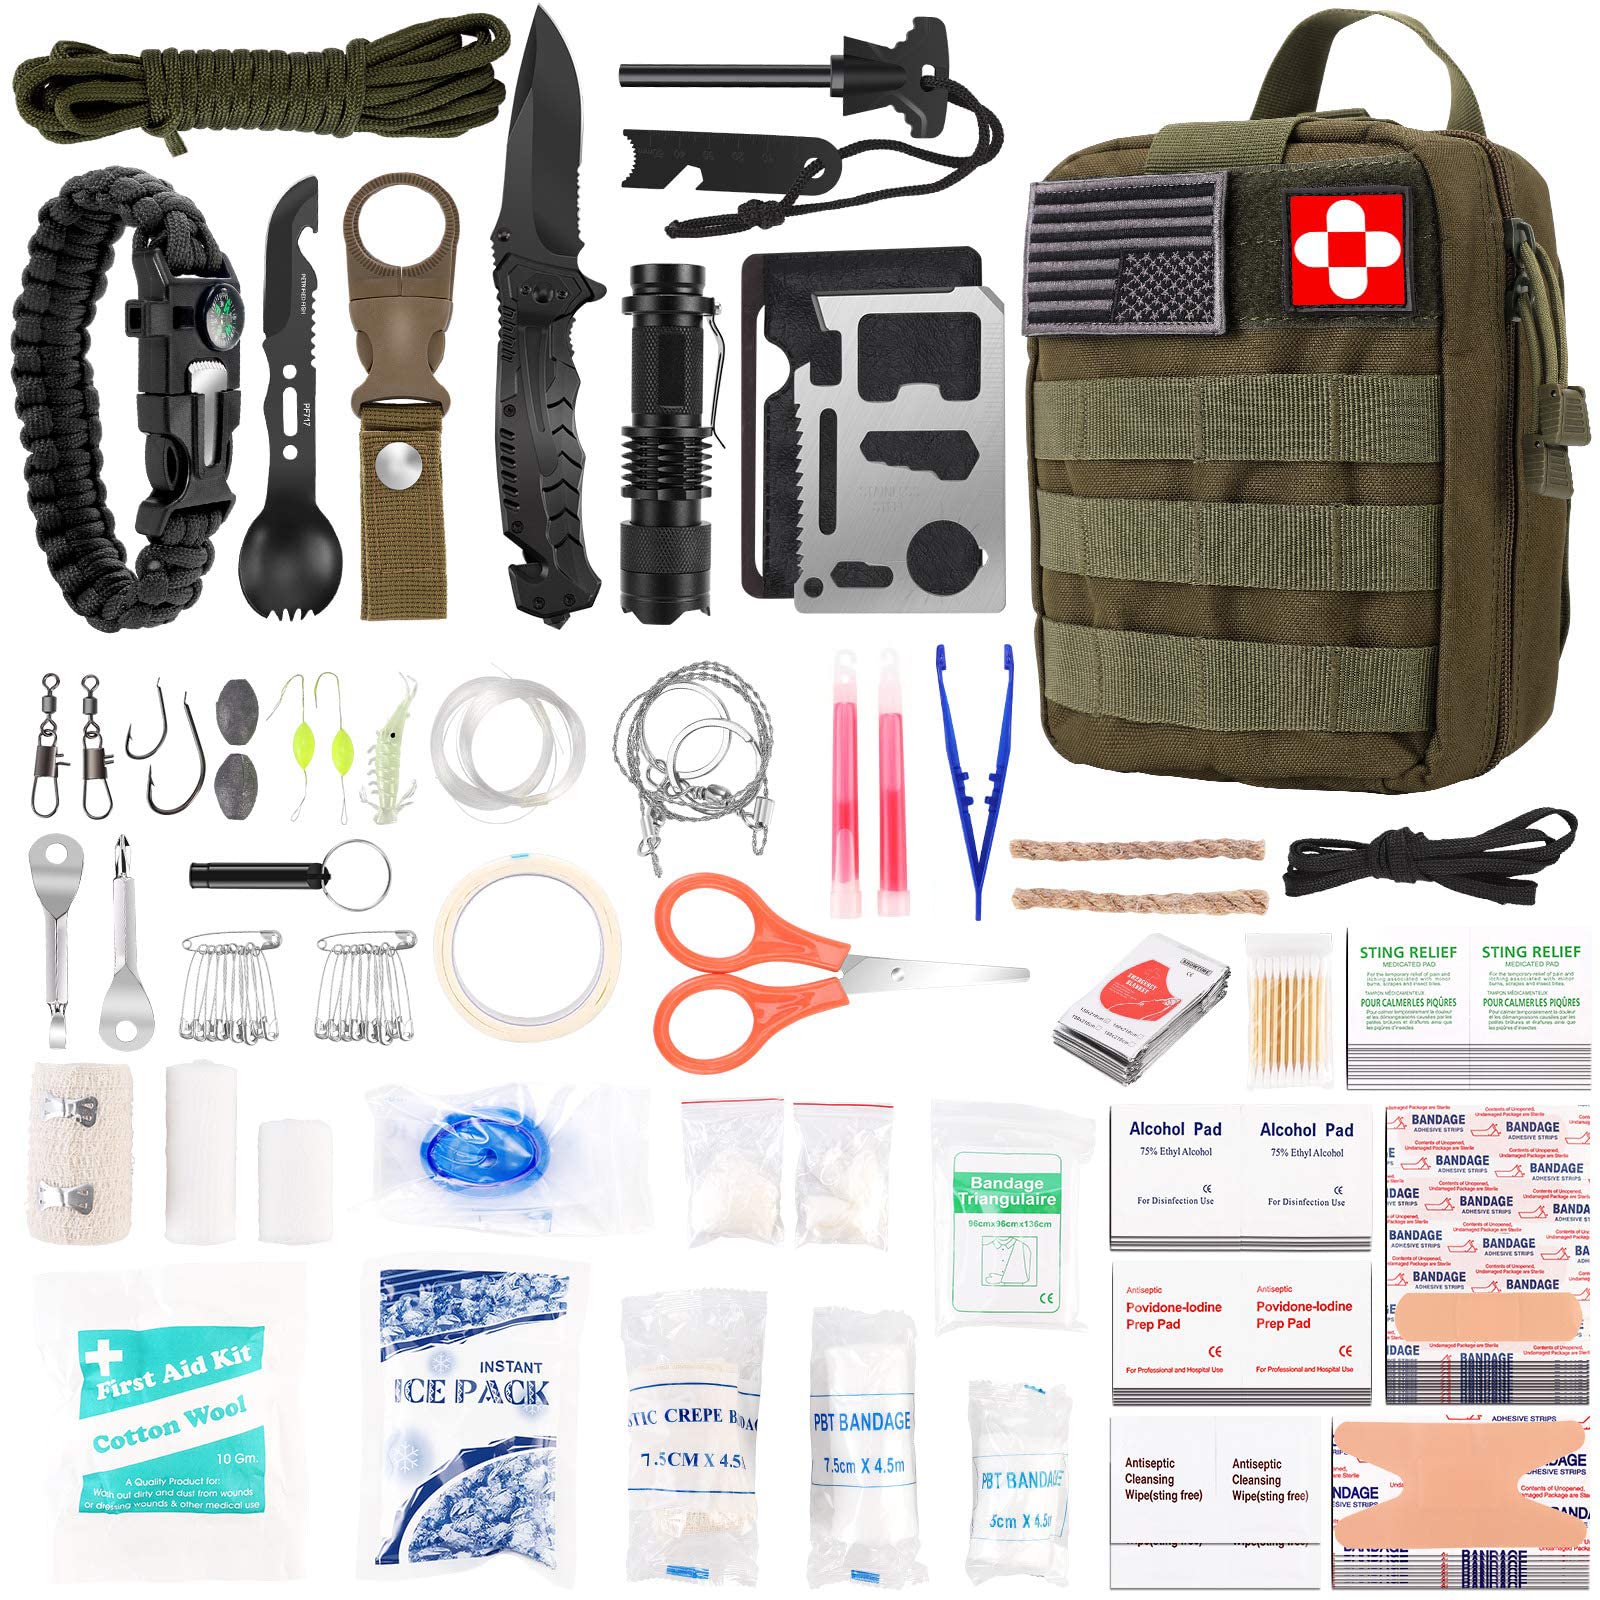 216 Pcs Survival First Aid kit, Professional Survival Gear